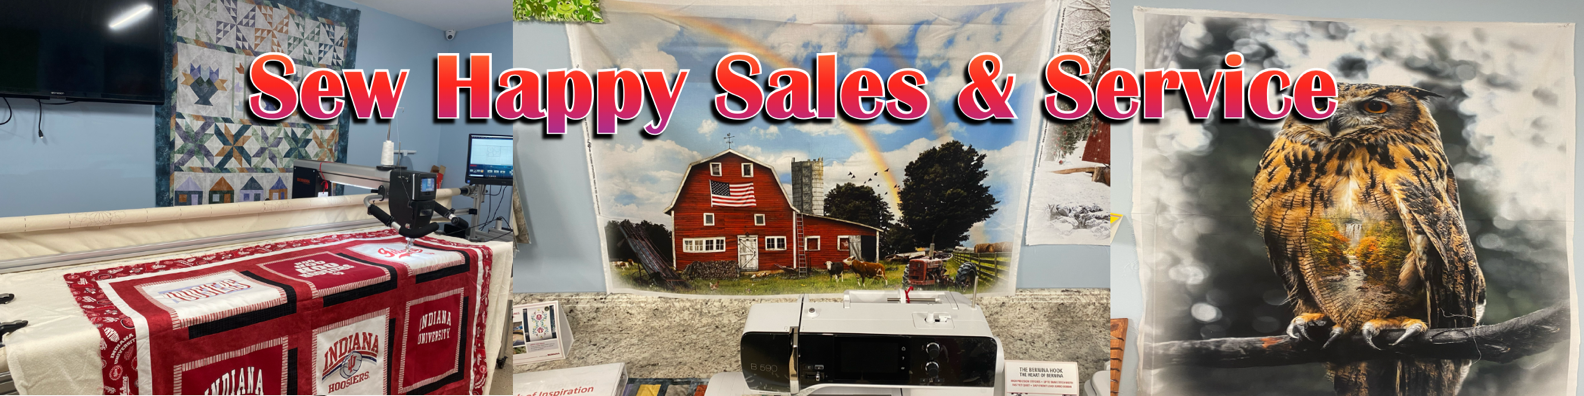 Home | Sew Happy Sales & Service